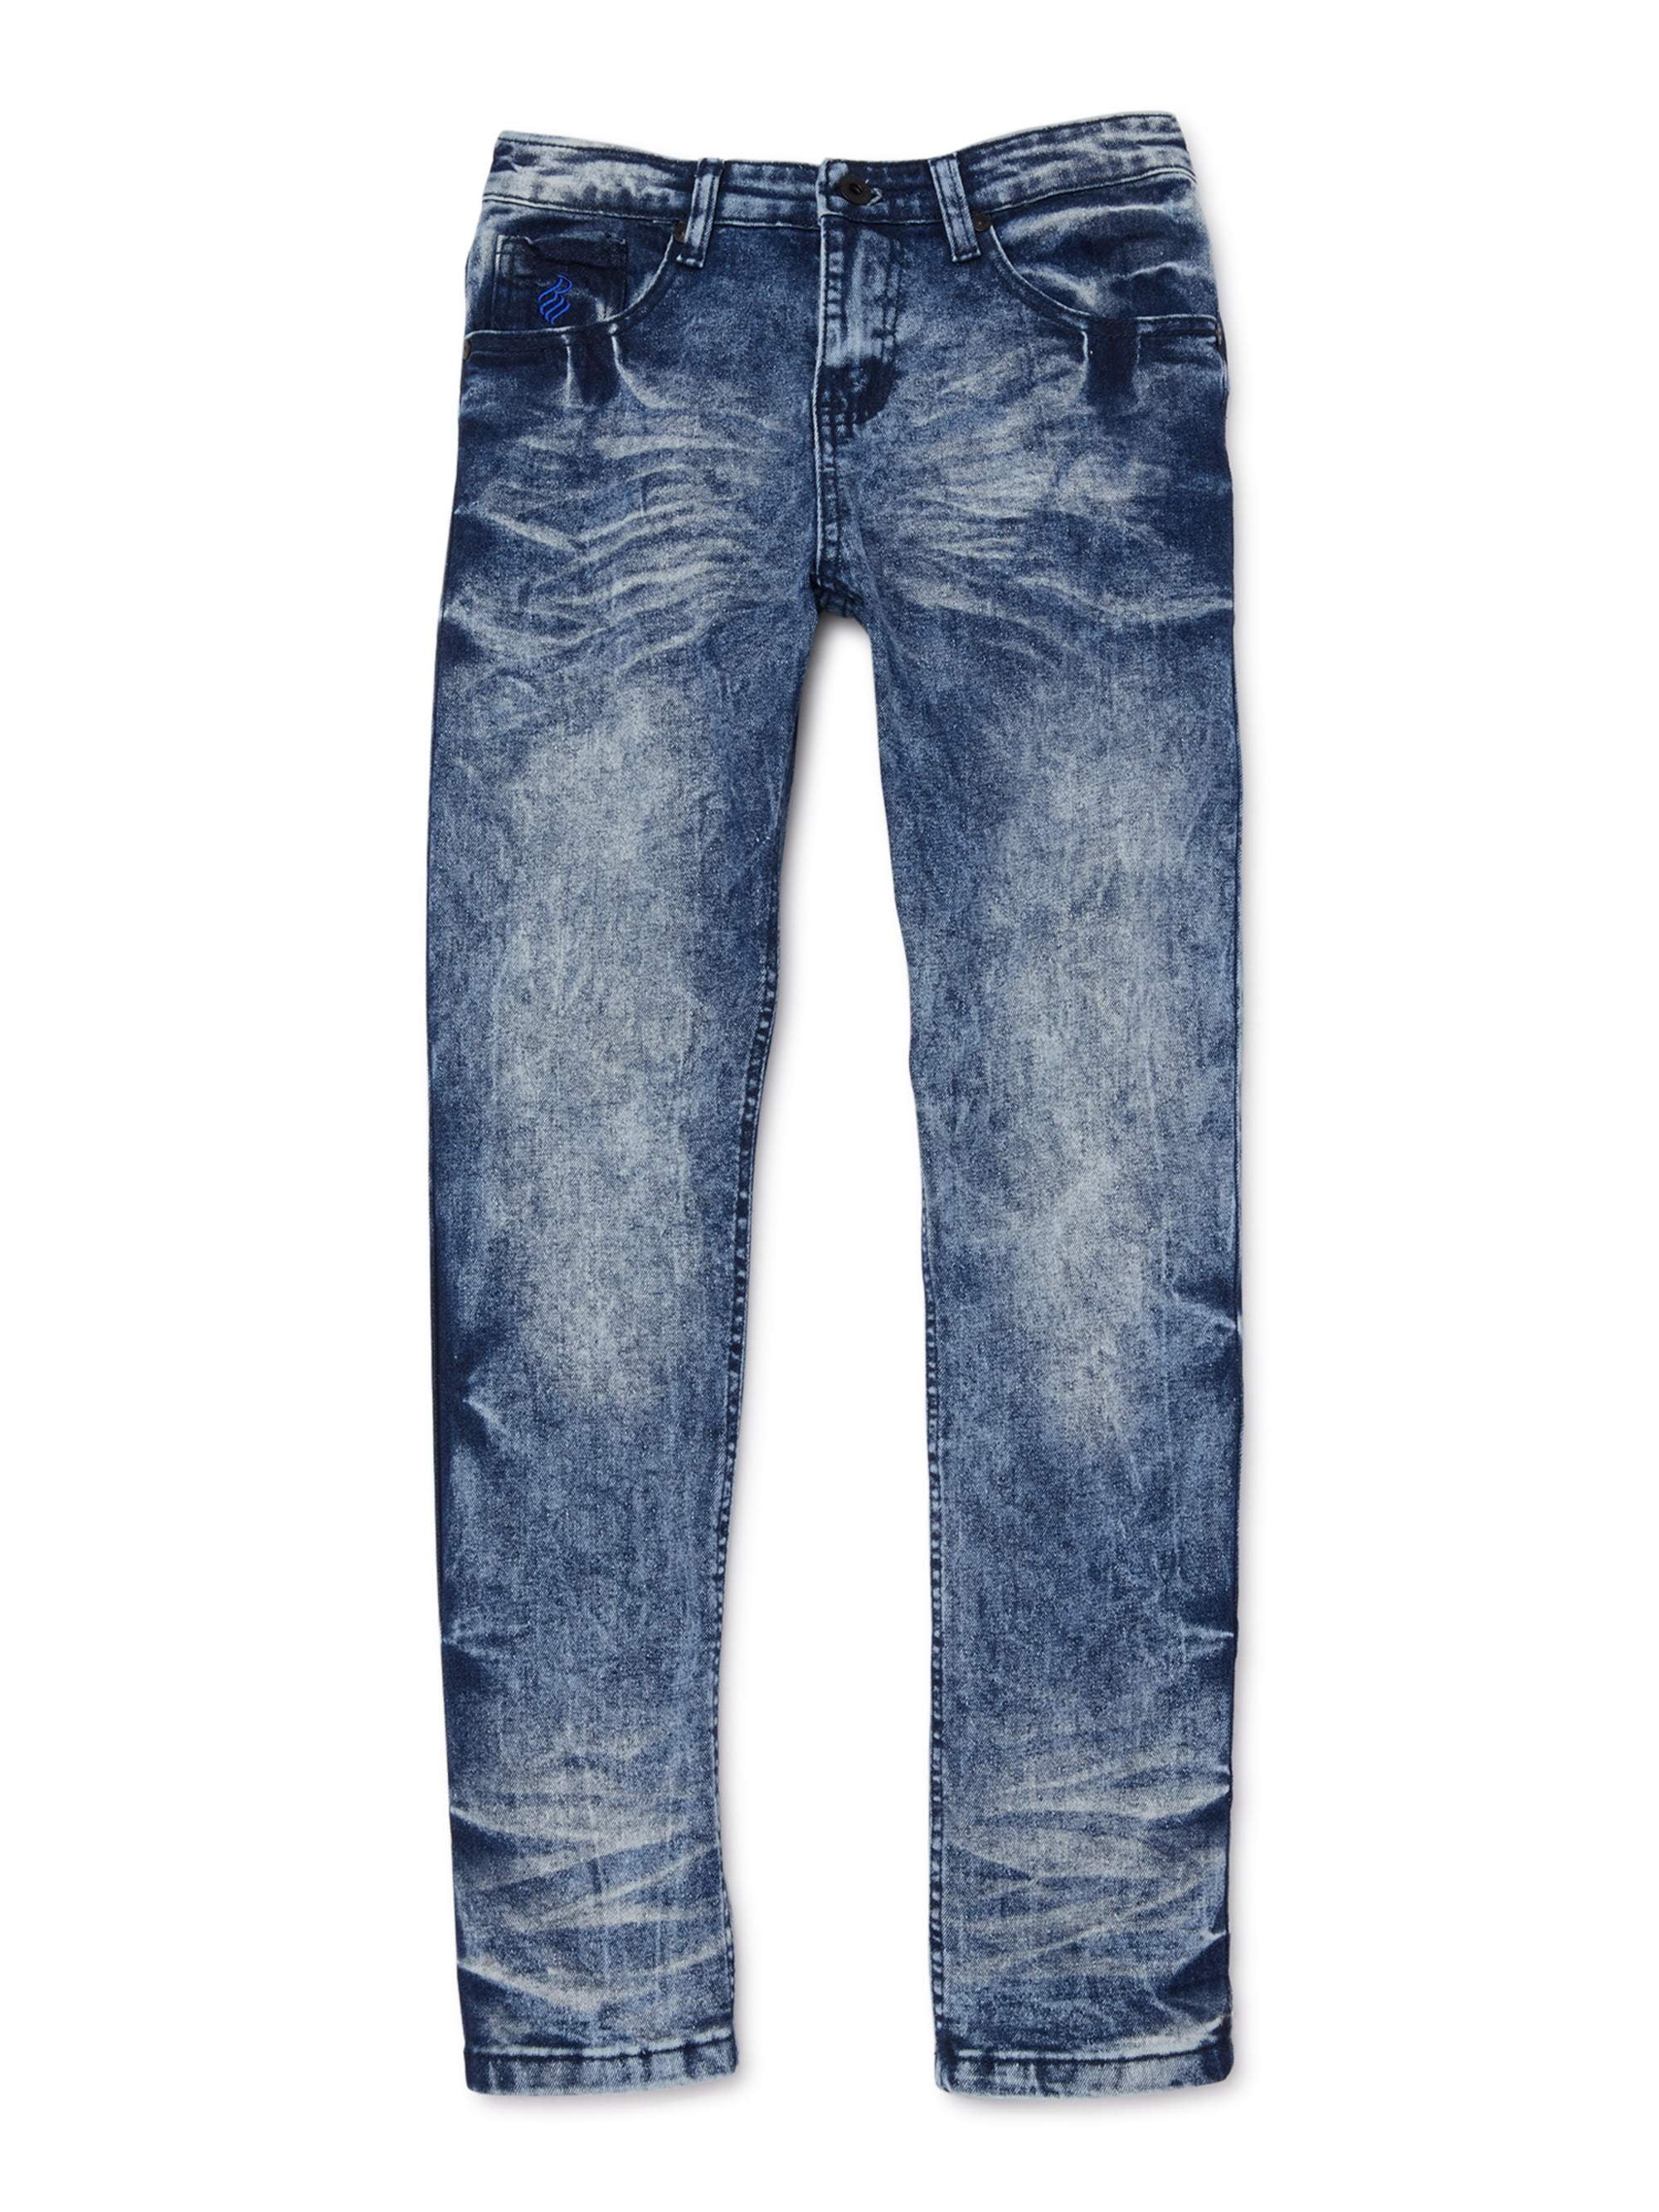 Rocawear Boys Slim Fit Jeans, Sizes 4-18 - Walmart.com